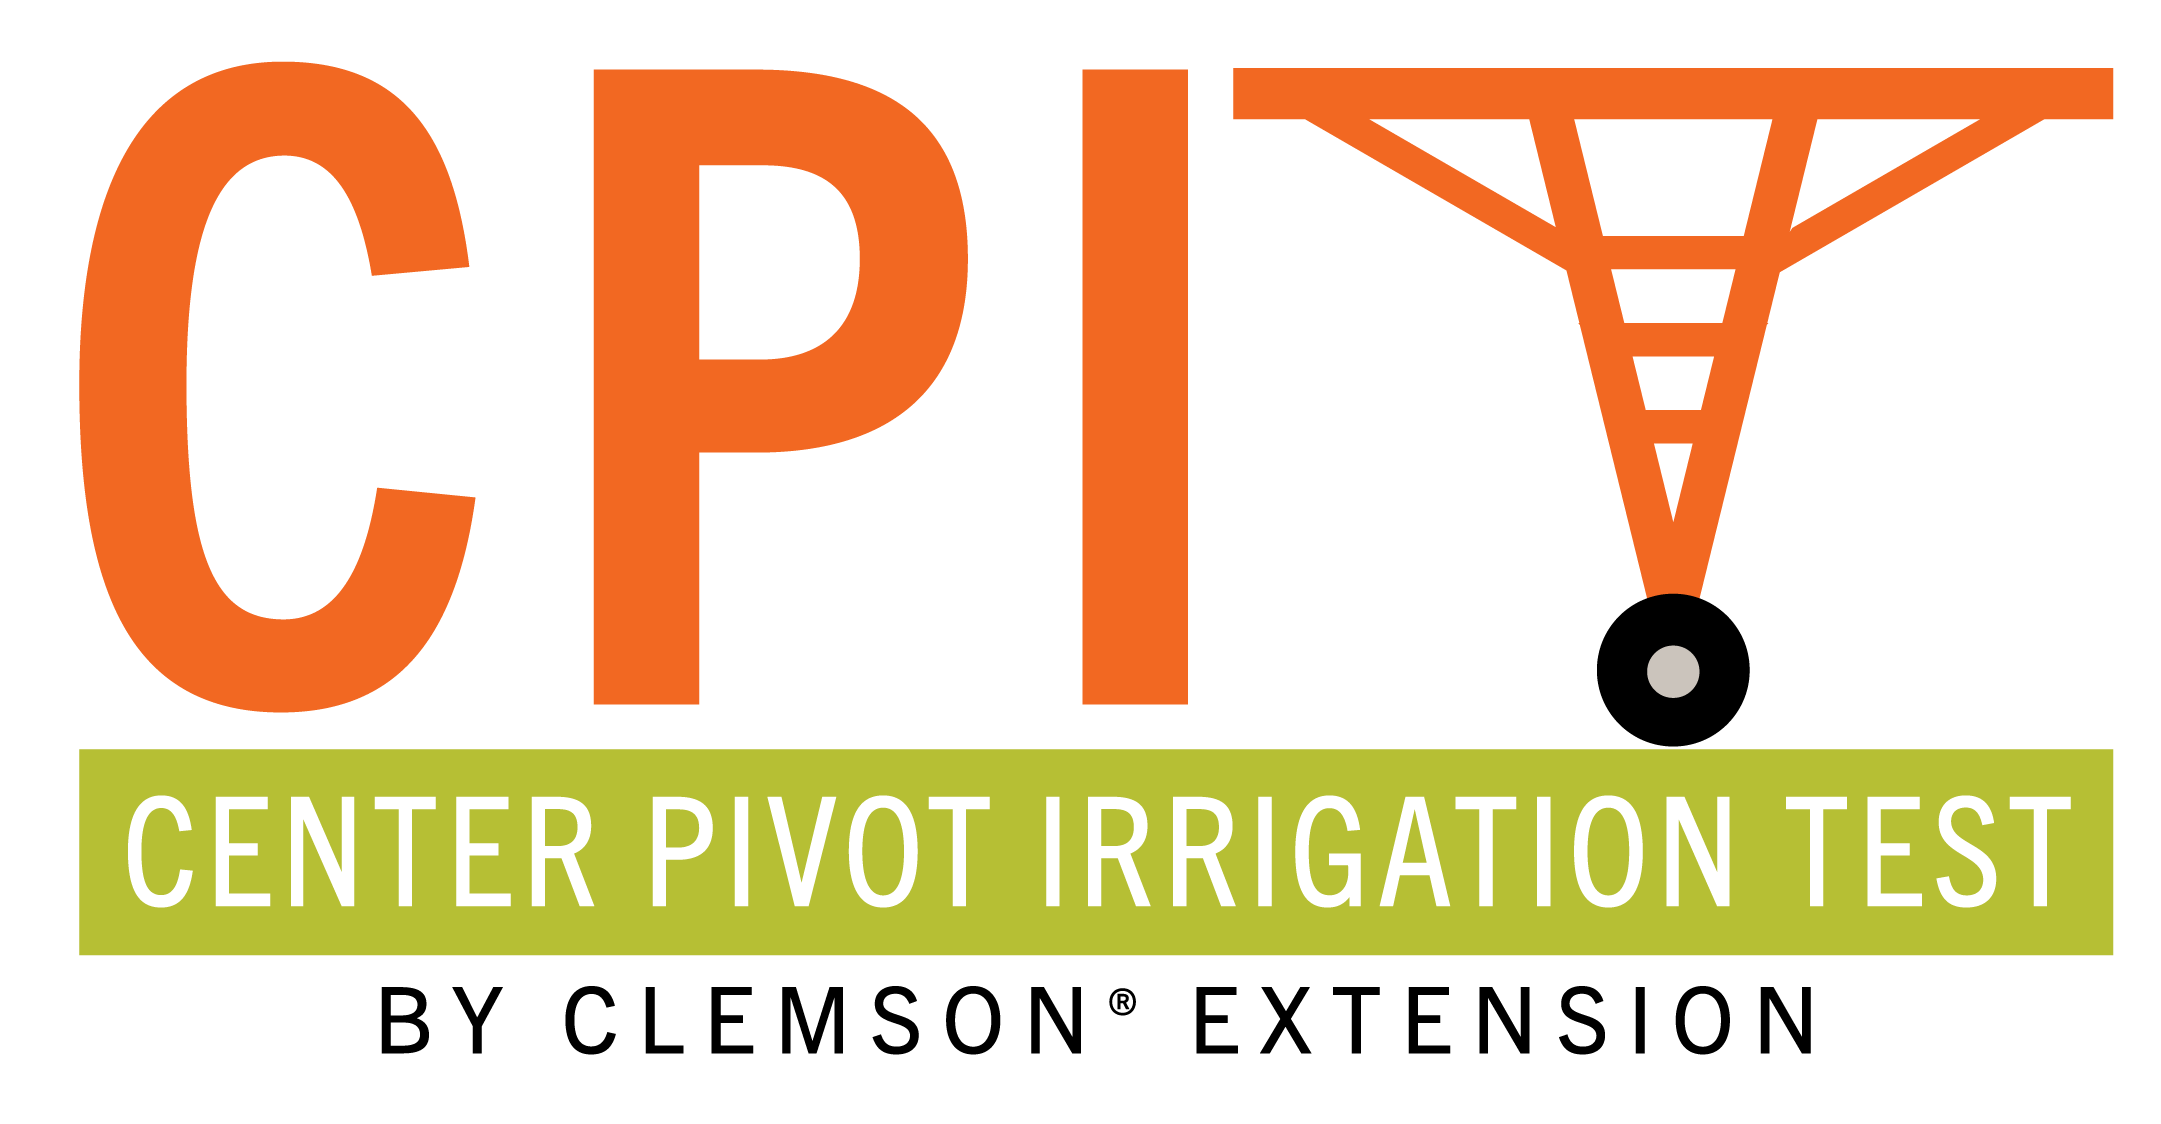 center pivot irrigation test by clemson extension